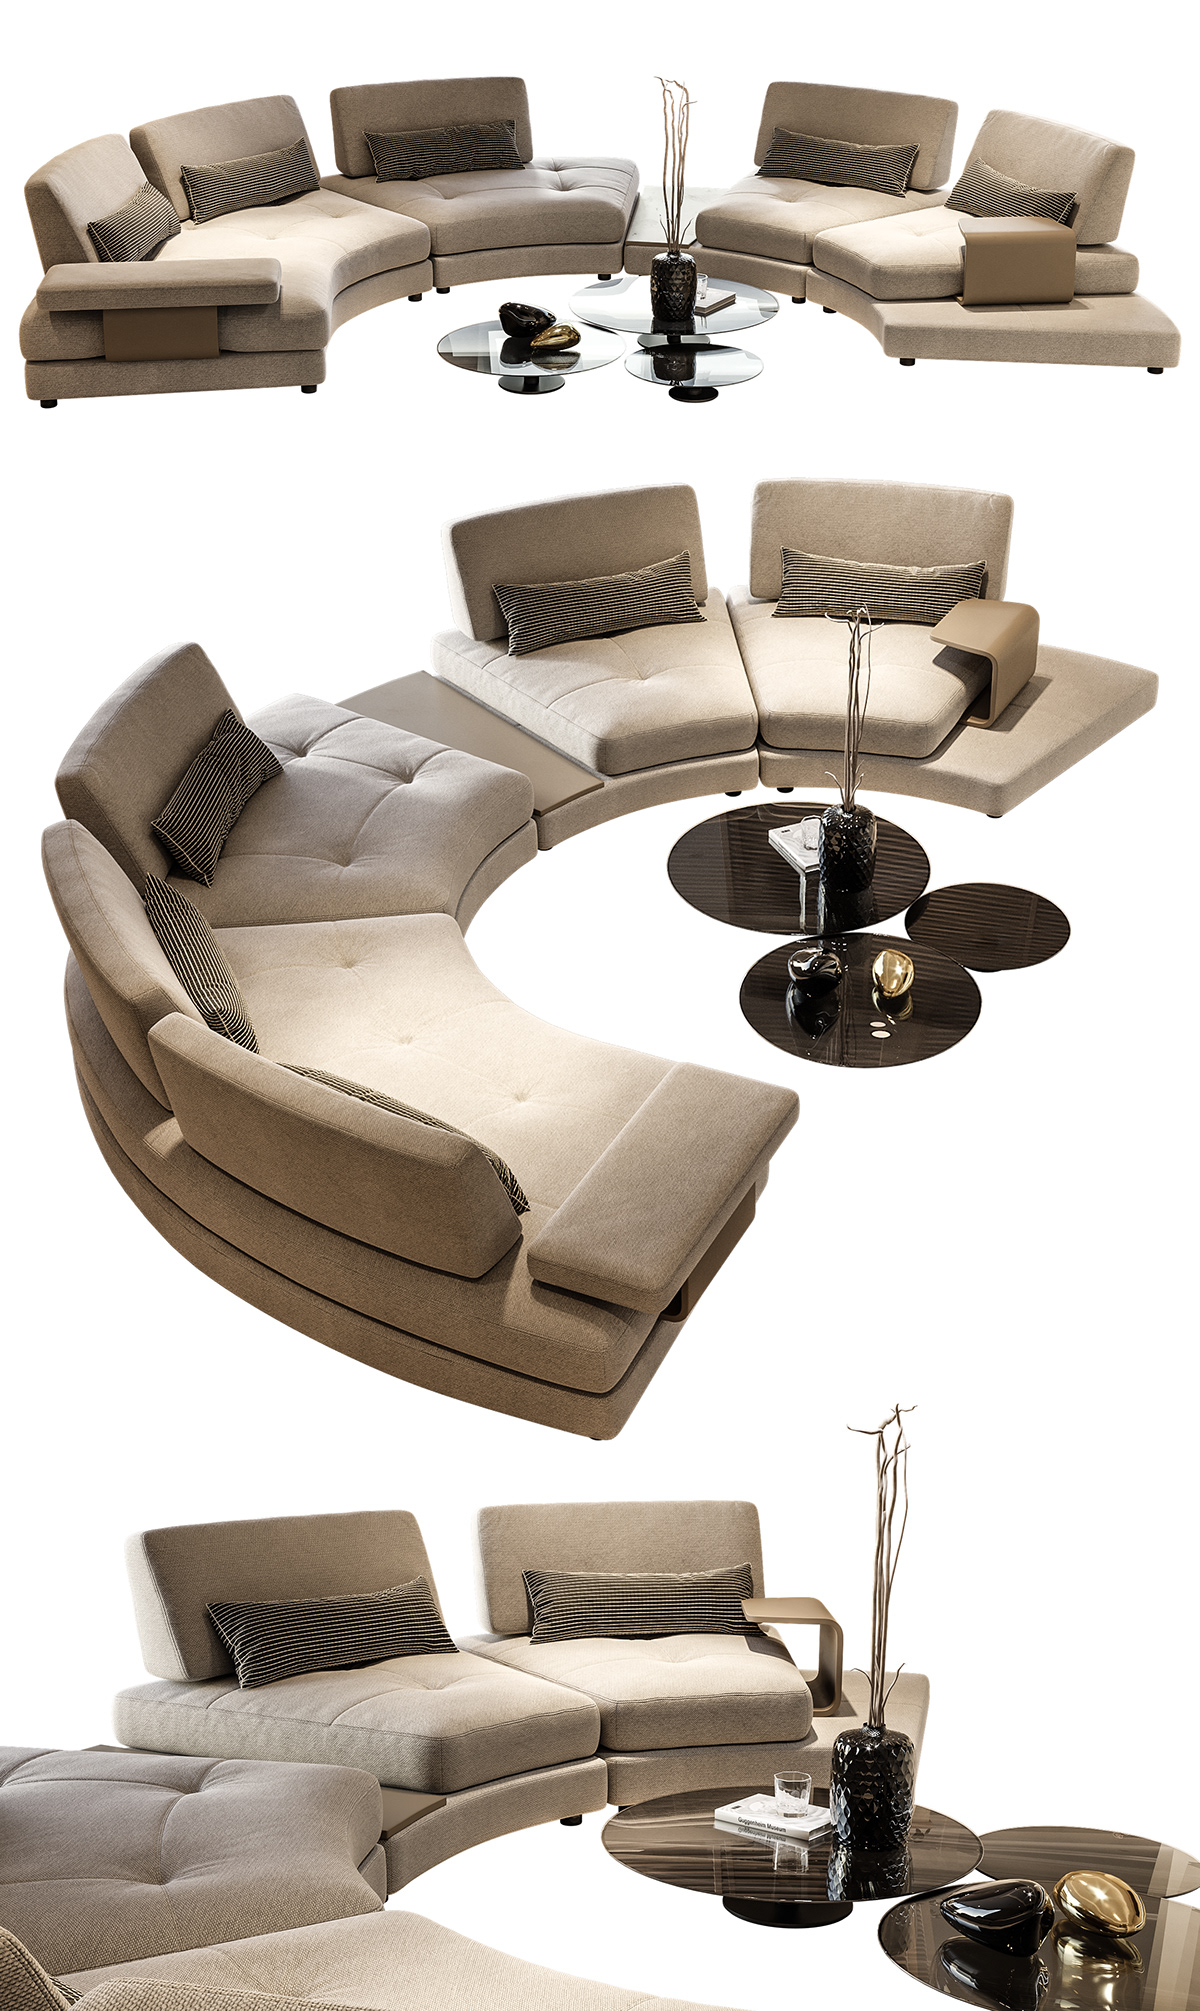 corona renderer corona 3ds max visualization 3d modeling furniture Pool kipr interior design 